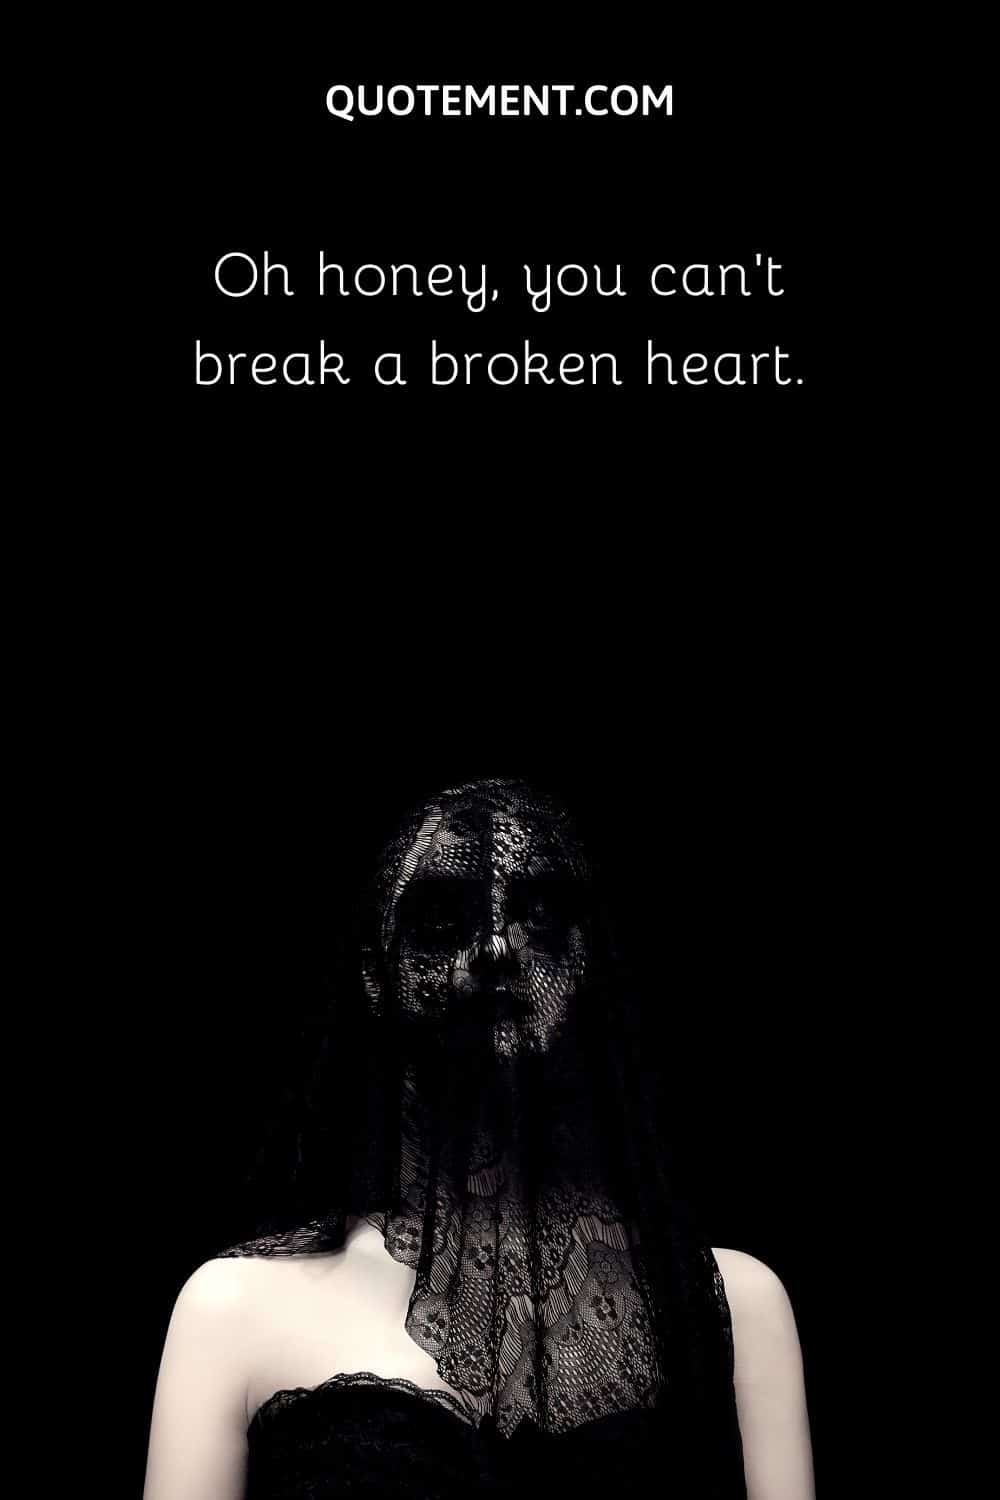 you can’t break a broken heart